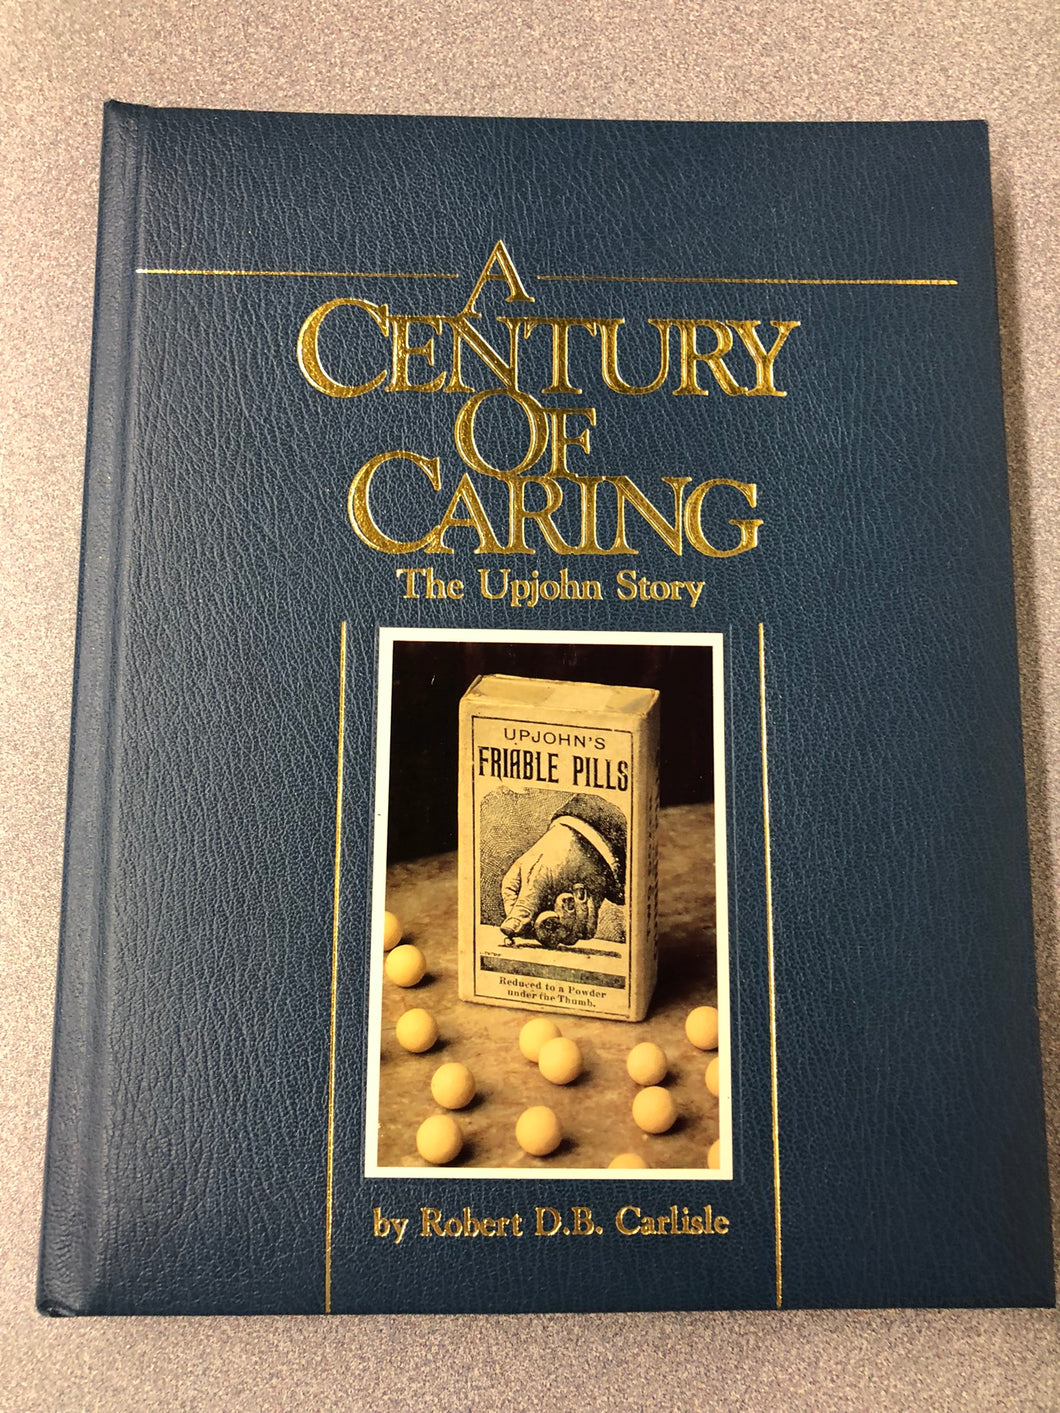 A Century of Caring: The Upjohn Story, Carlisle, Robert D. B., [1987] MI 9/22